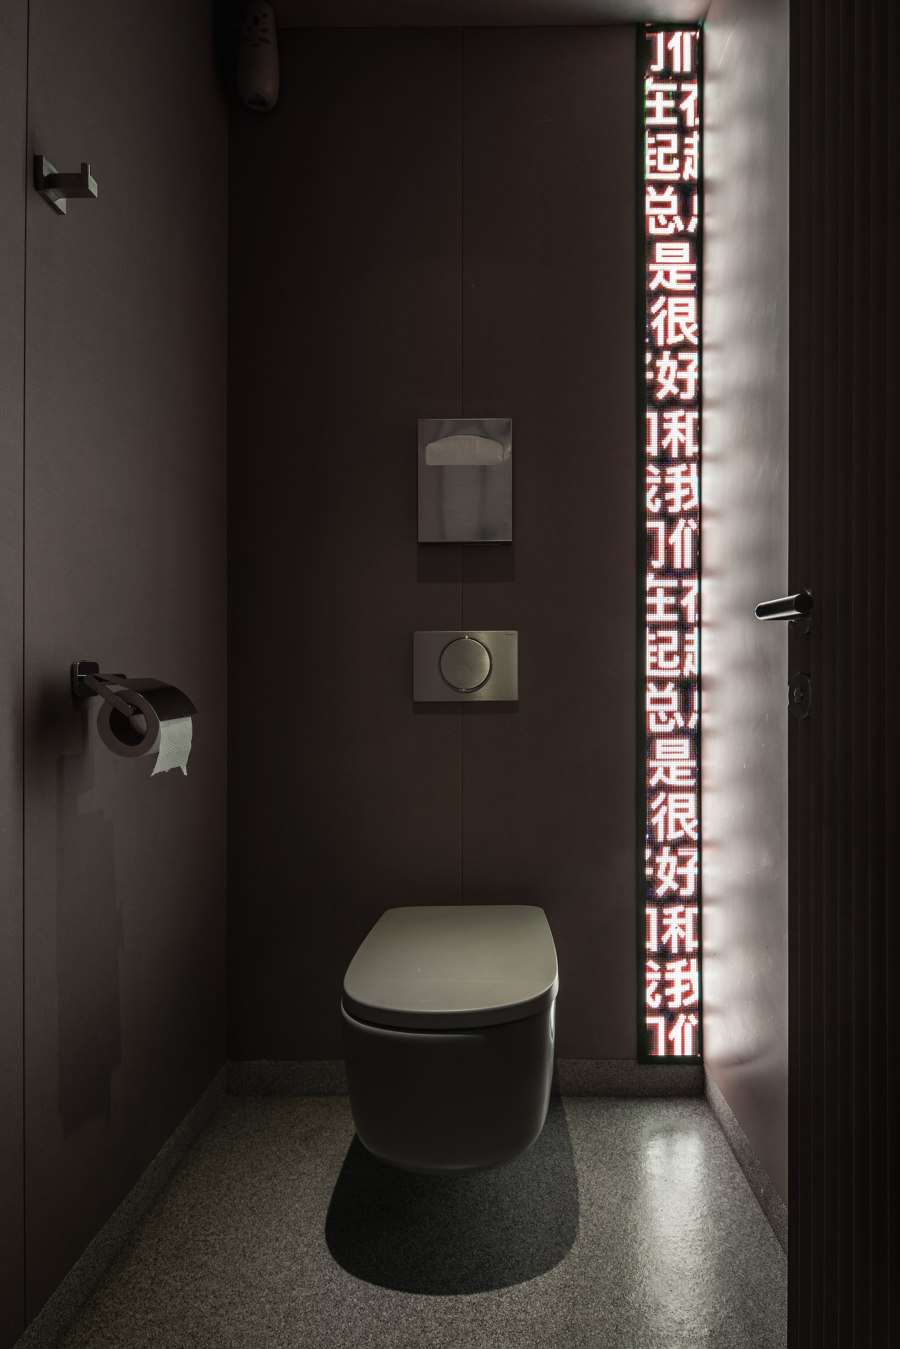 China Ma von YOD Group | Restaurant-Interieurs